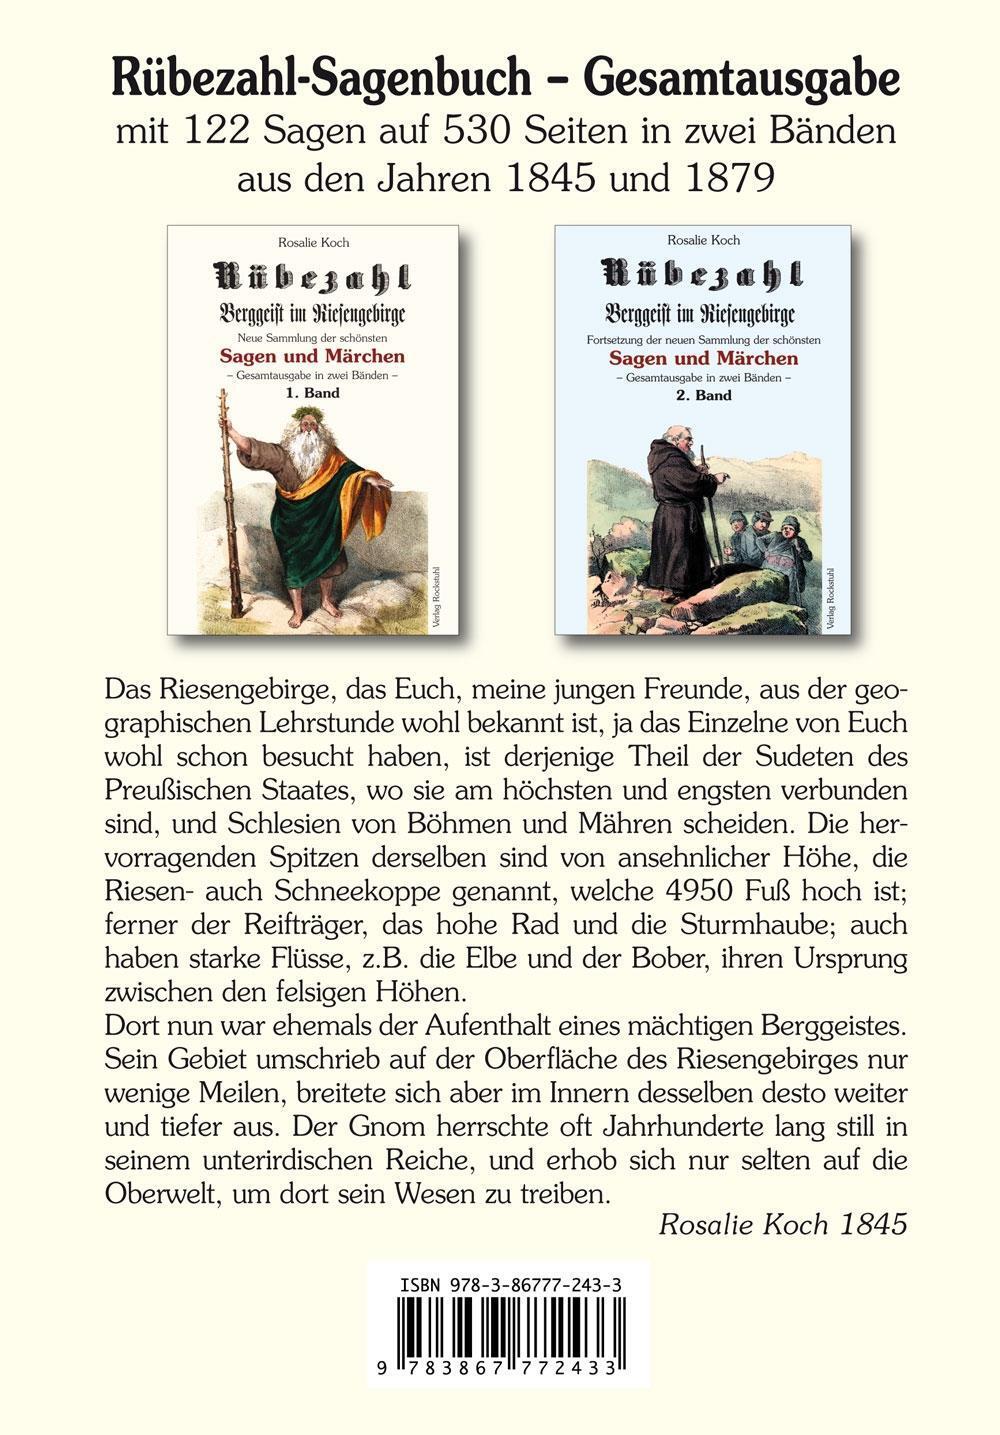 Bild: 9783867772433 | Rübezahl - Berggeist im Riesengebirge 1845 - Band 1 | Rosalie Koch